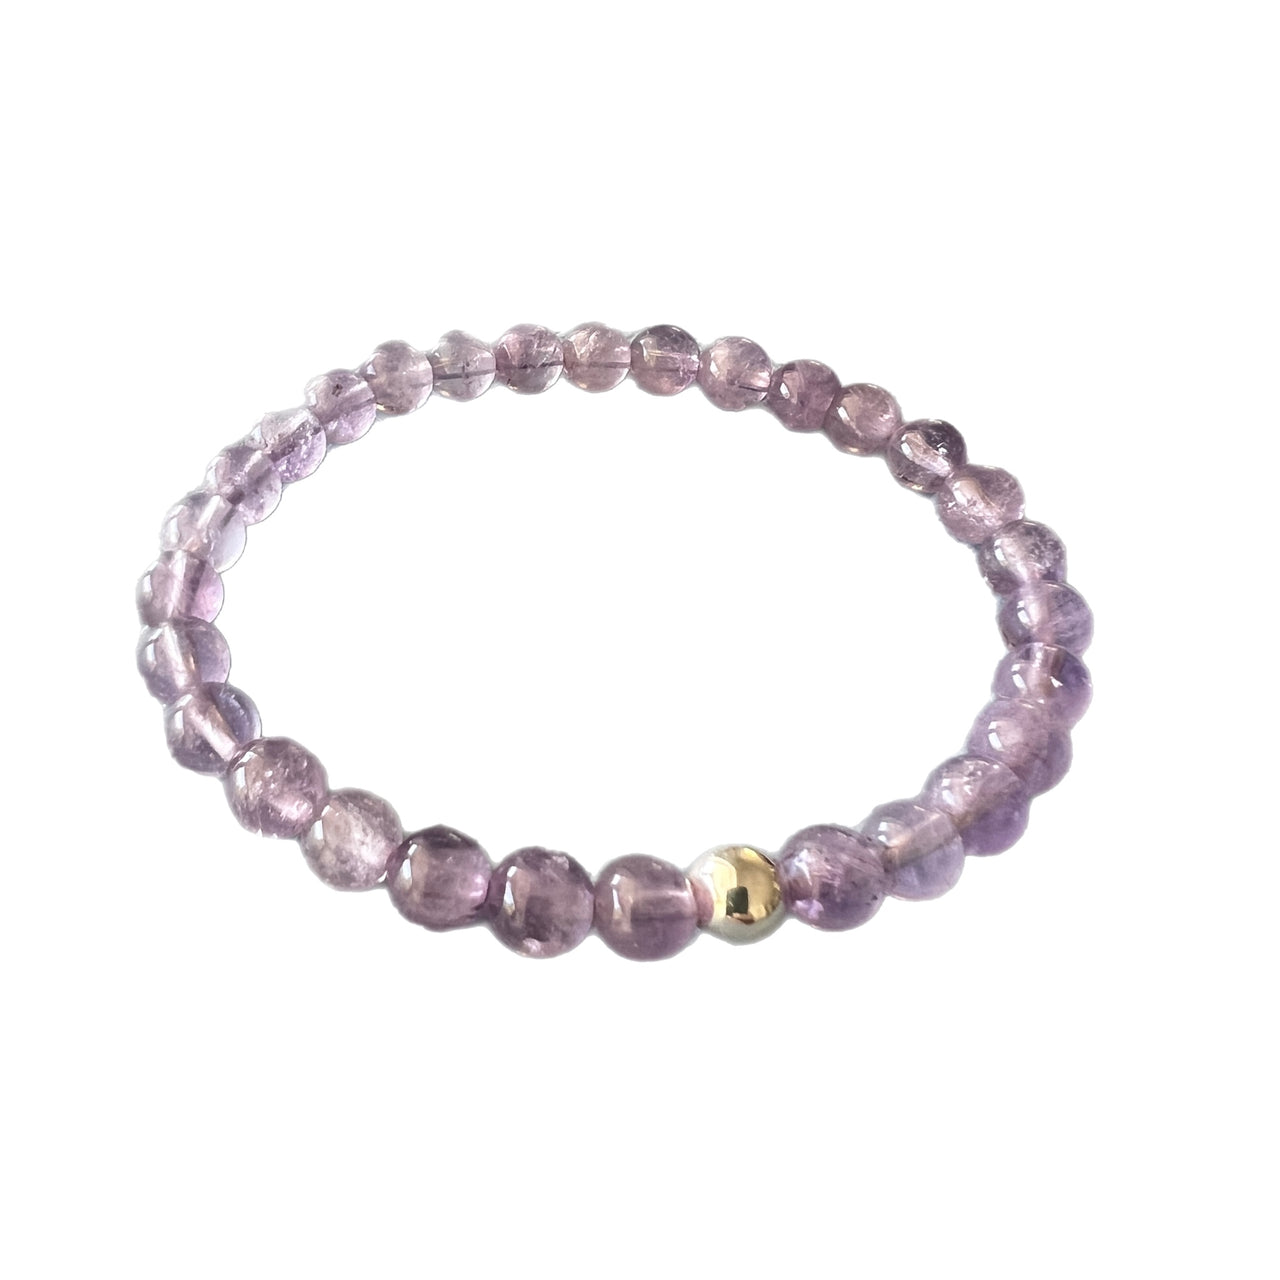 Lilac Amethyst Small Bead Healing Bracelet Silver